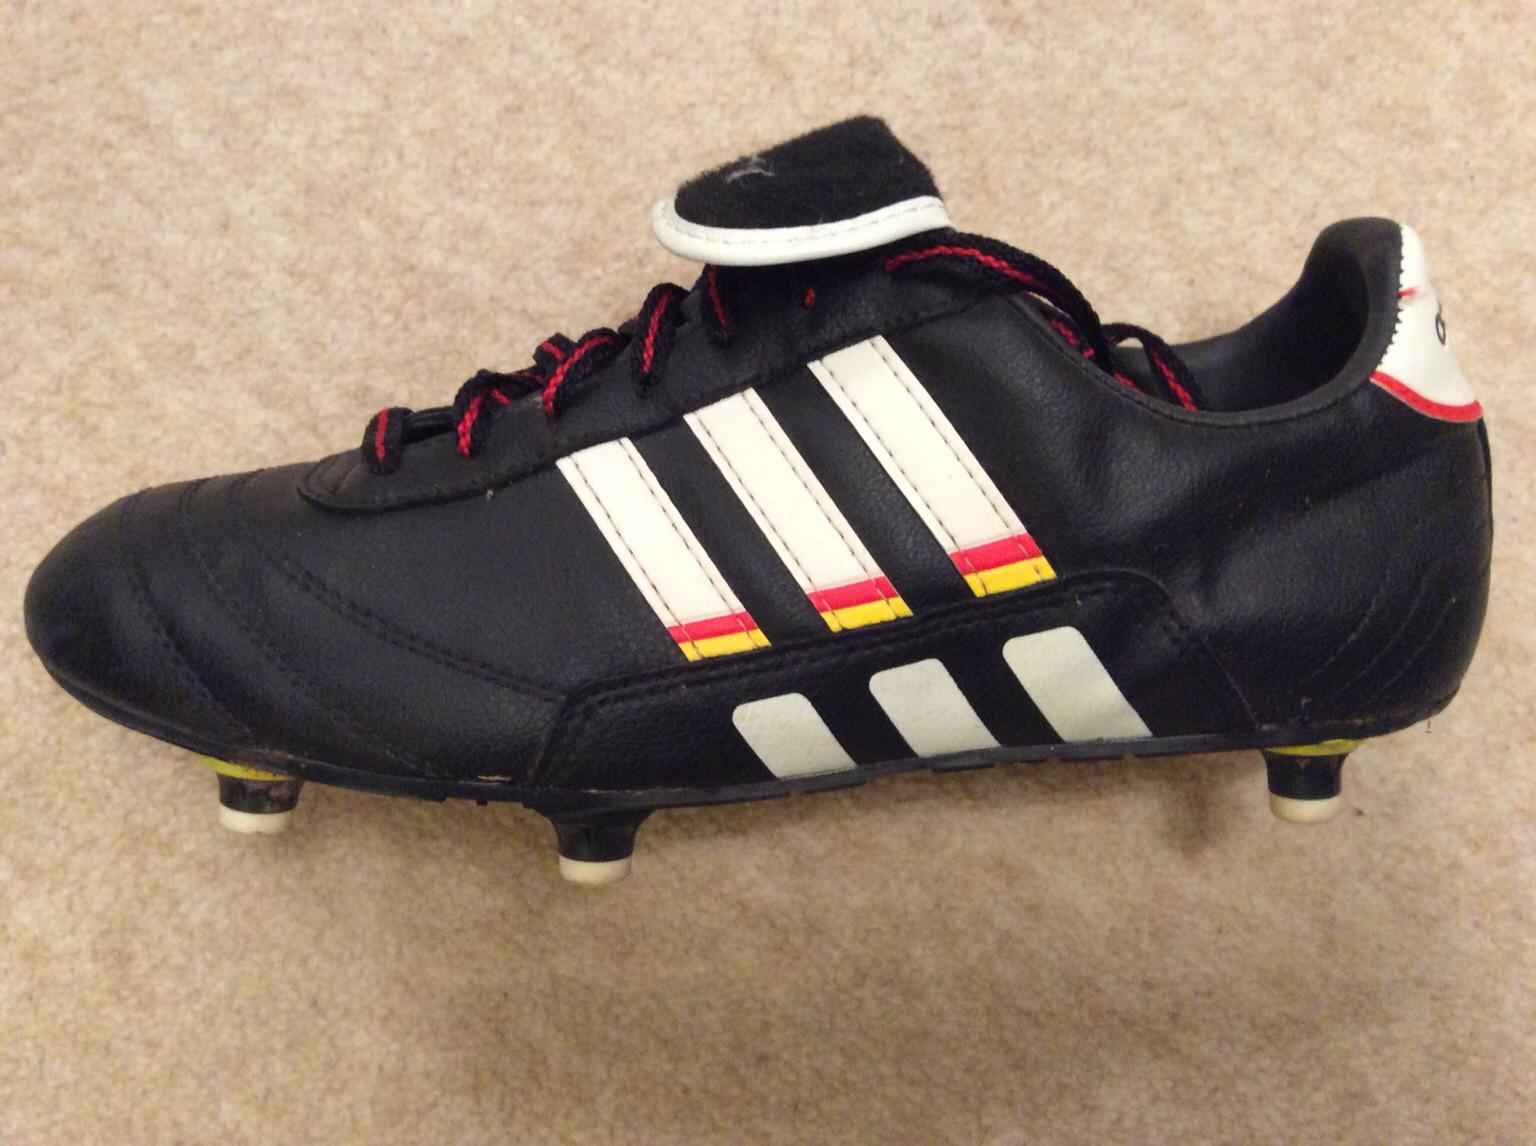 adidas equipment football boots